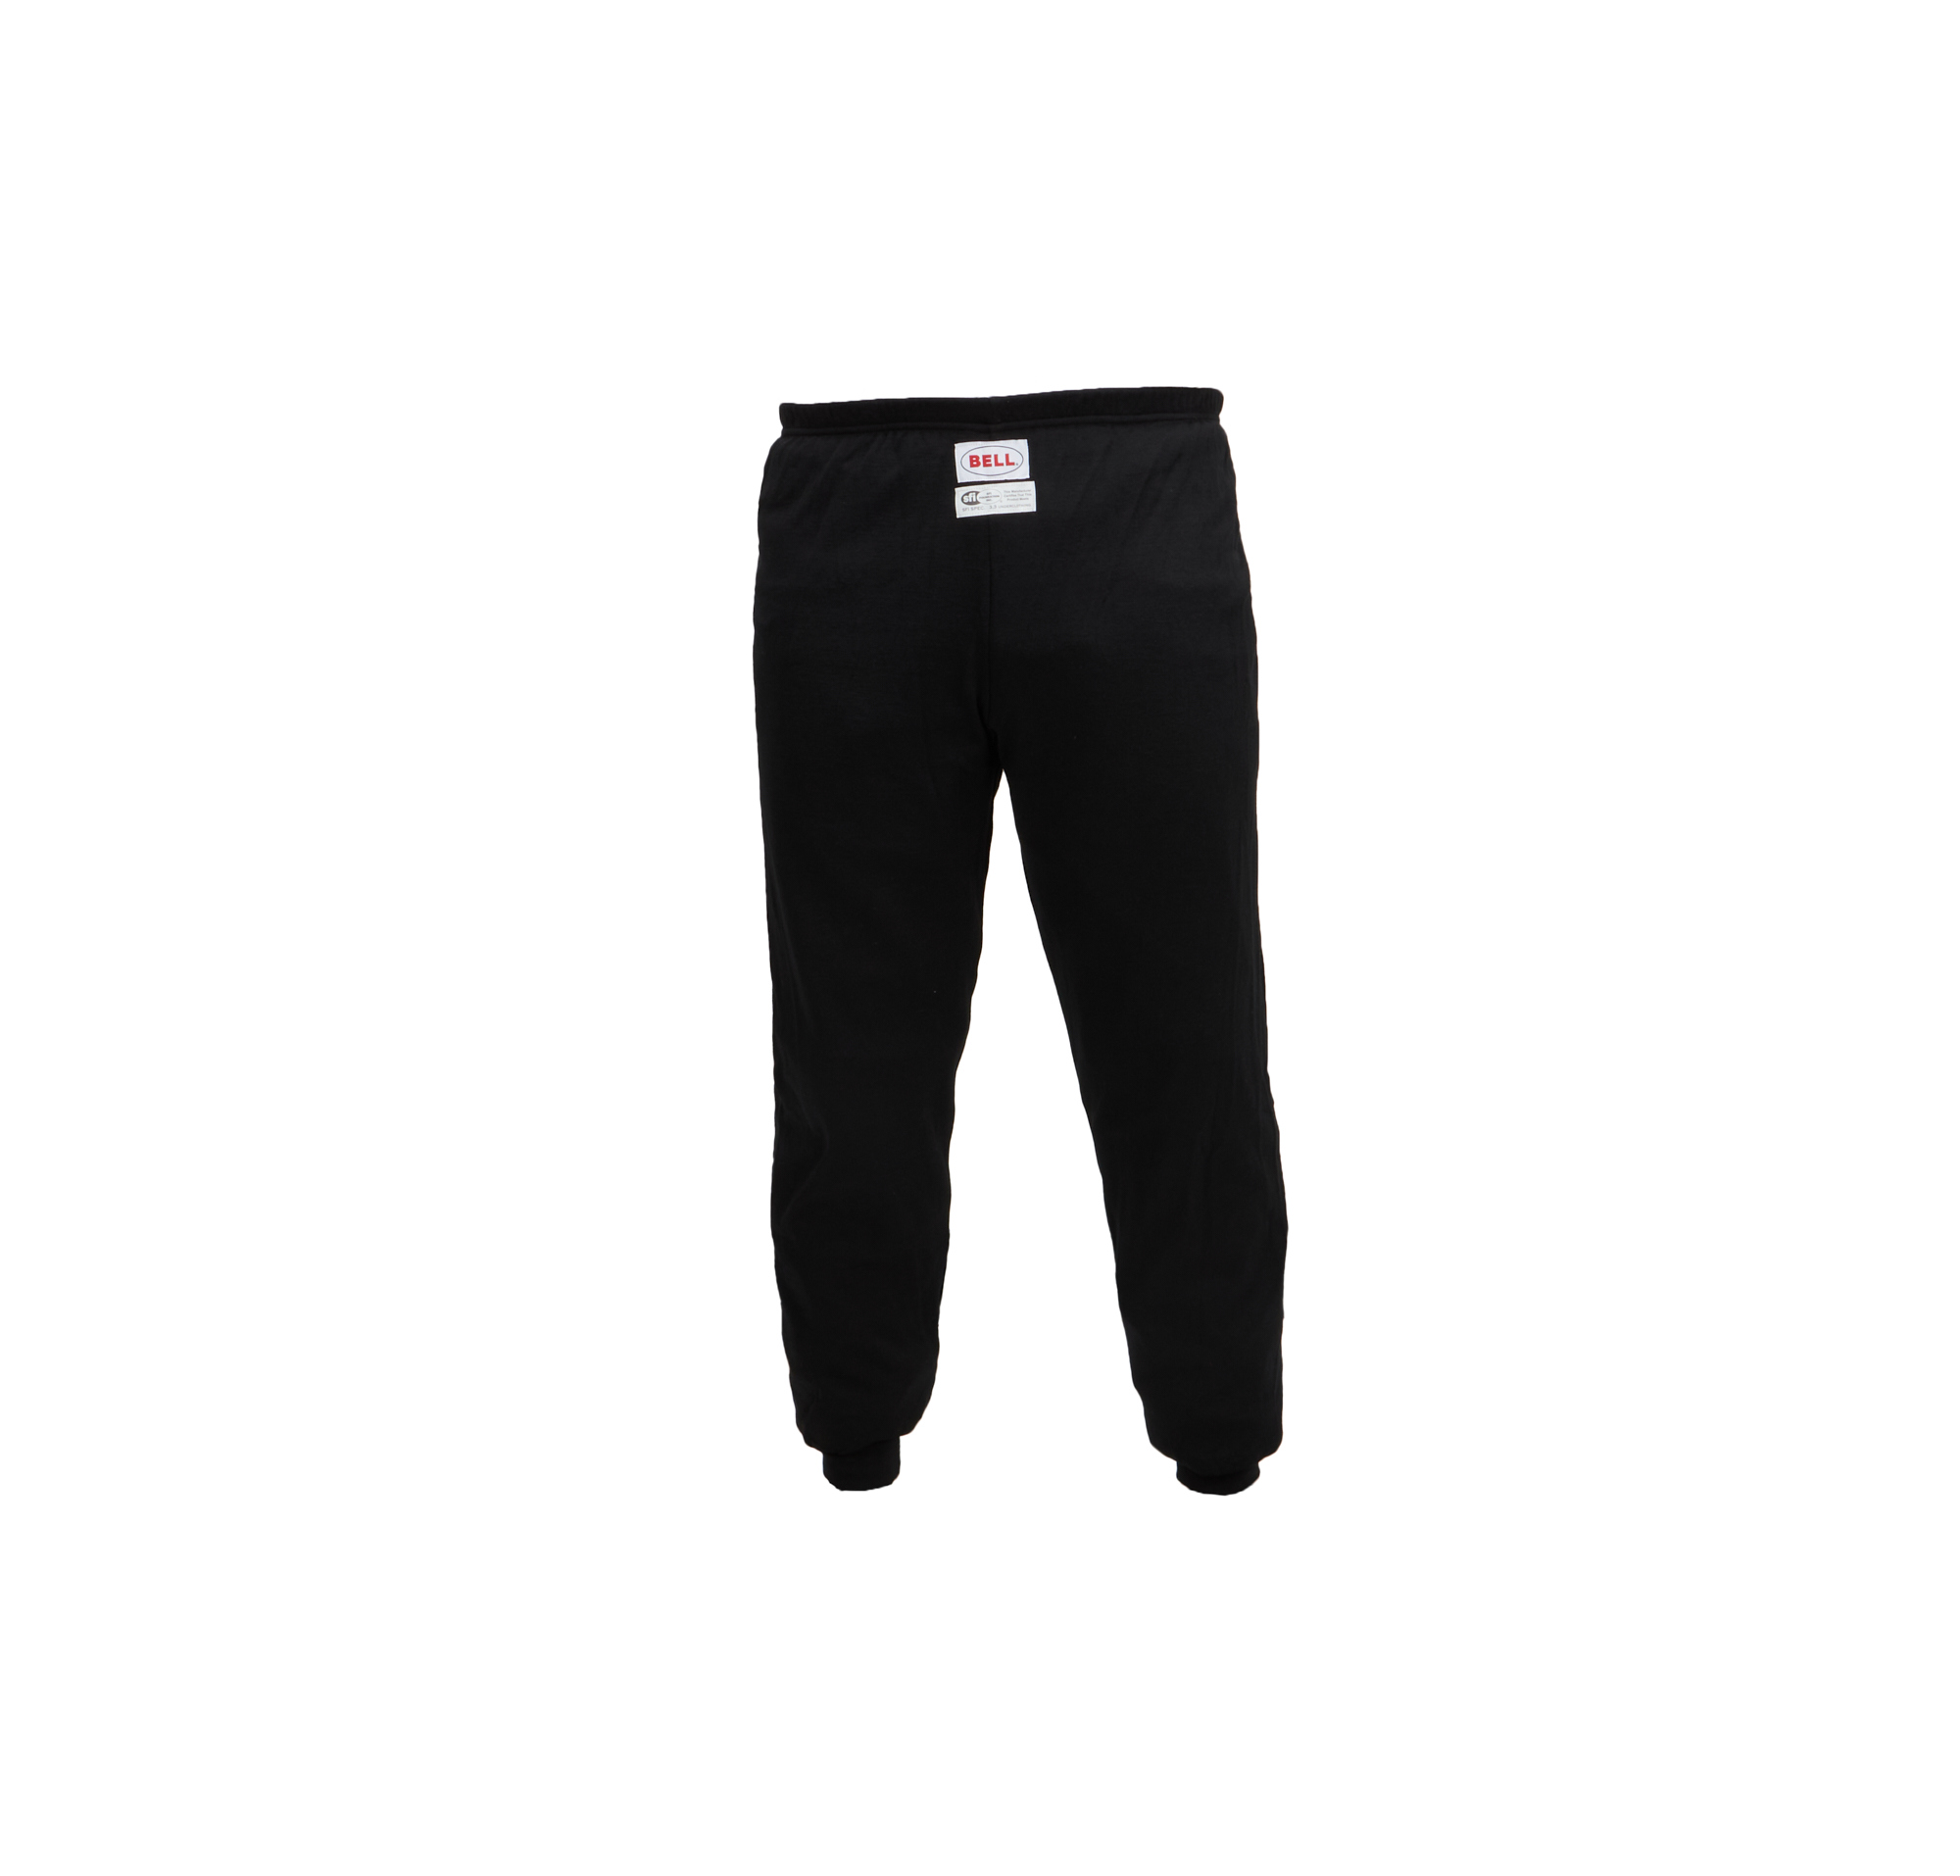 Underwear Bottom SPORT- TX Black 2X SFI 3.3/5 - BR40085